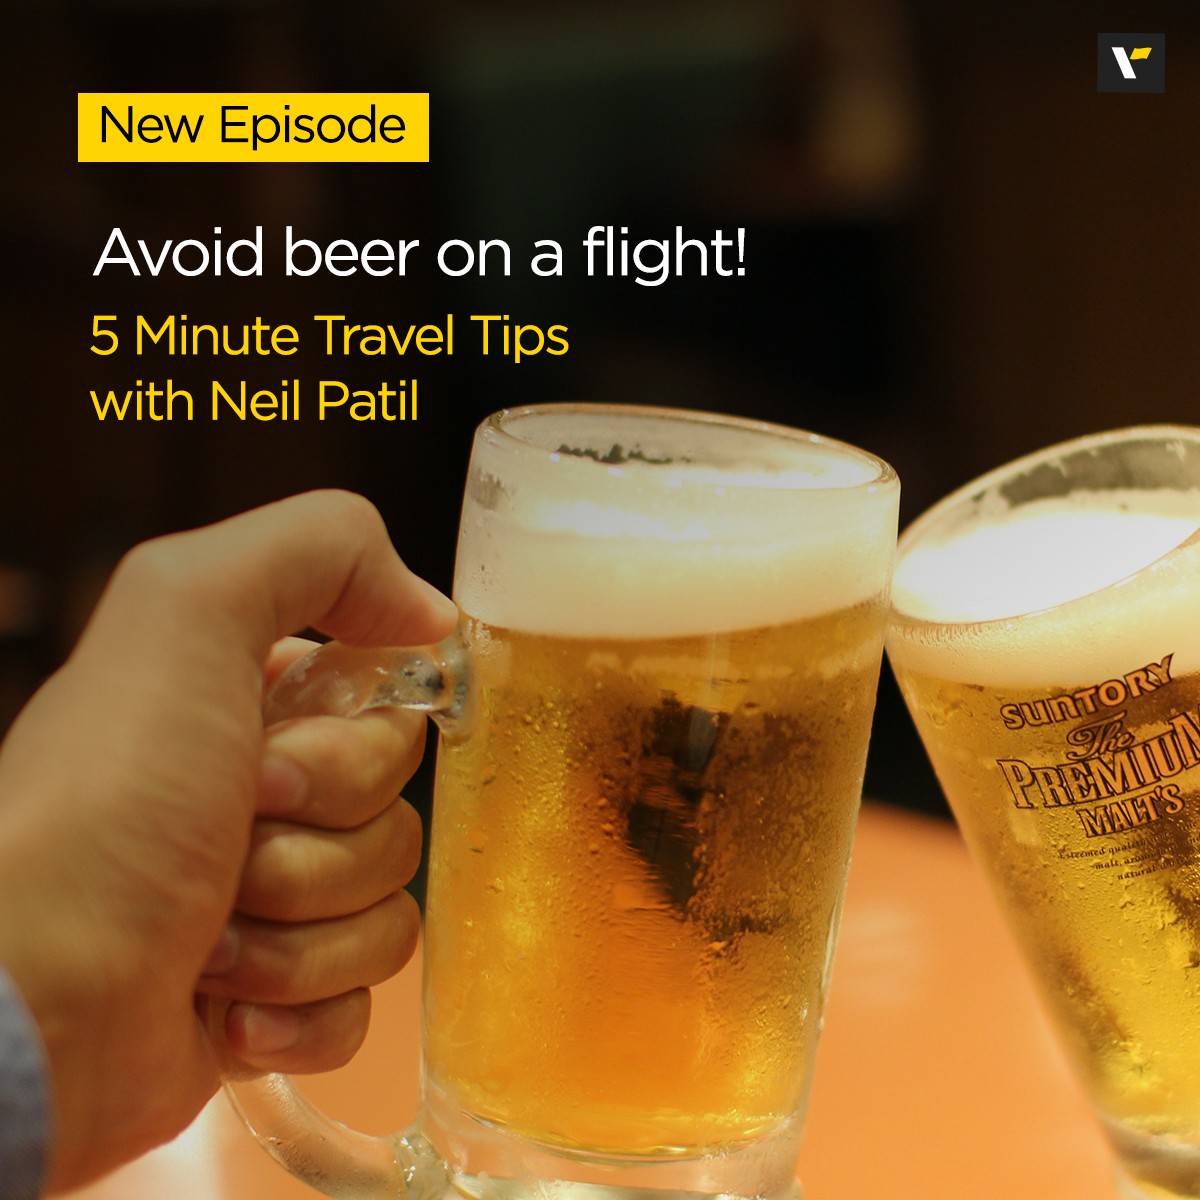 Avoid beer on a flight!